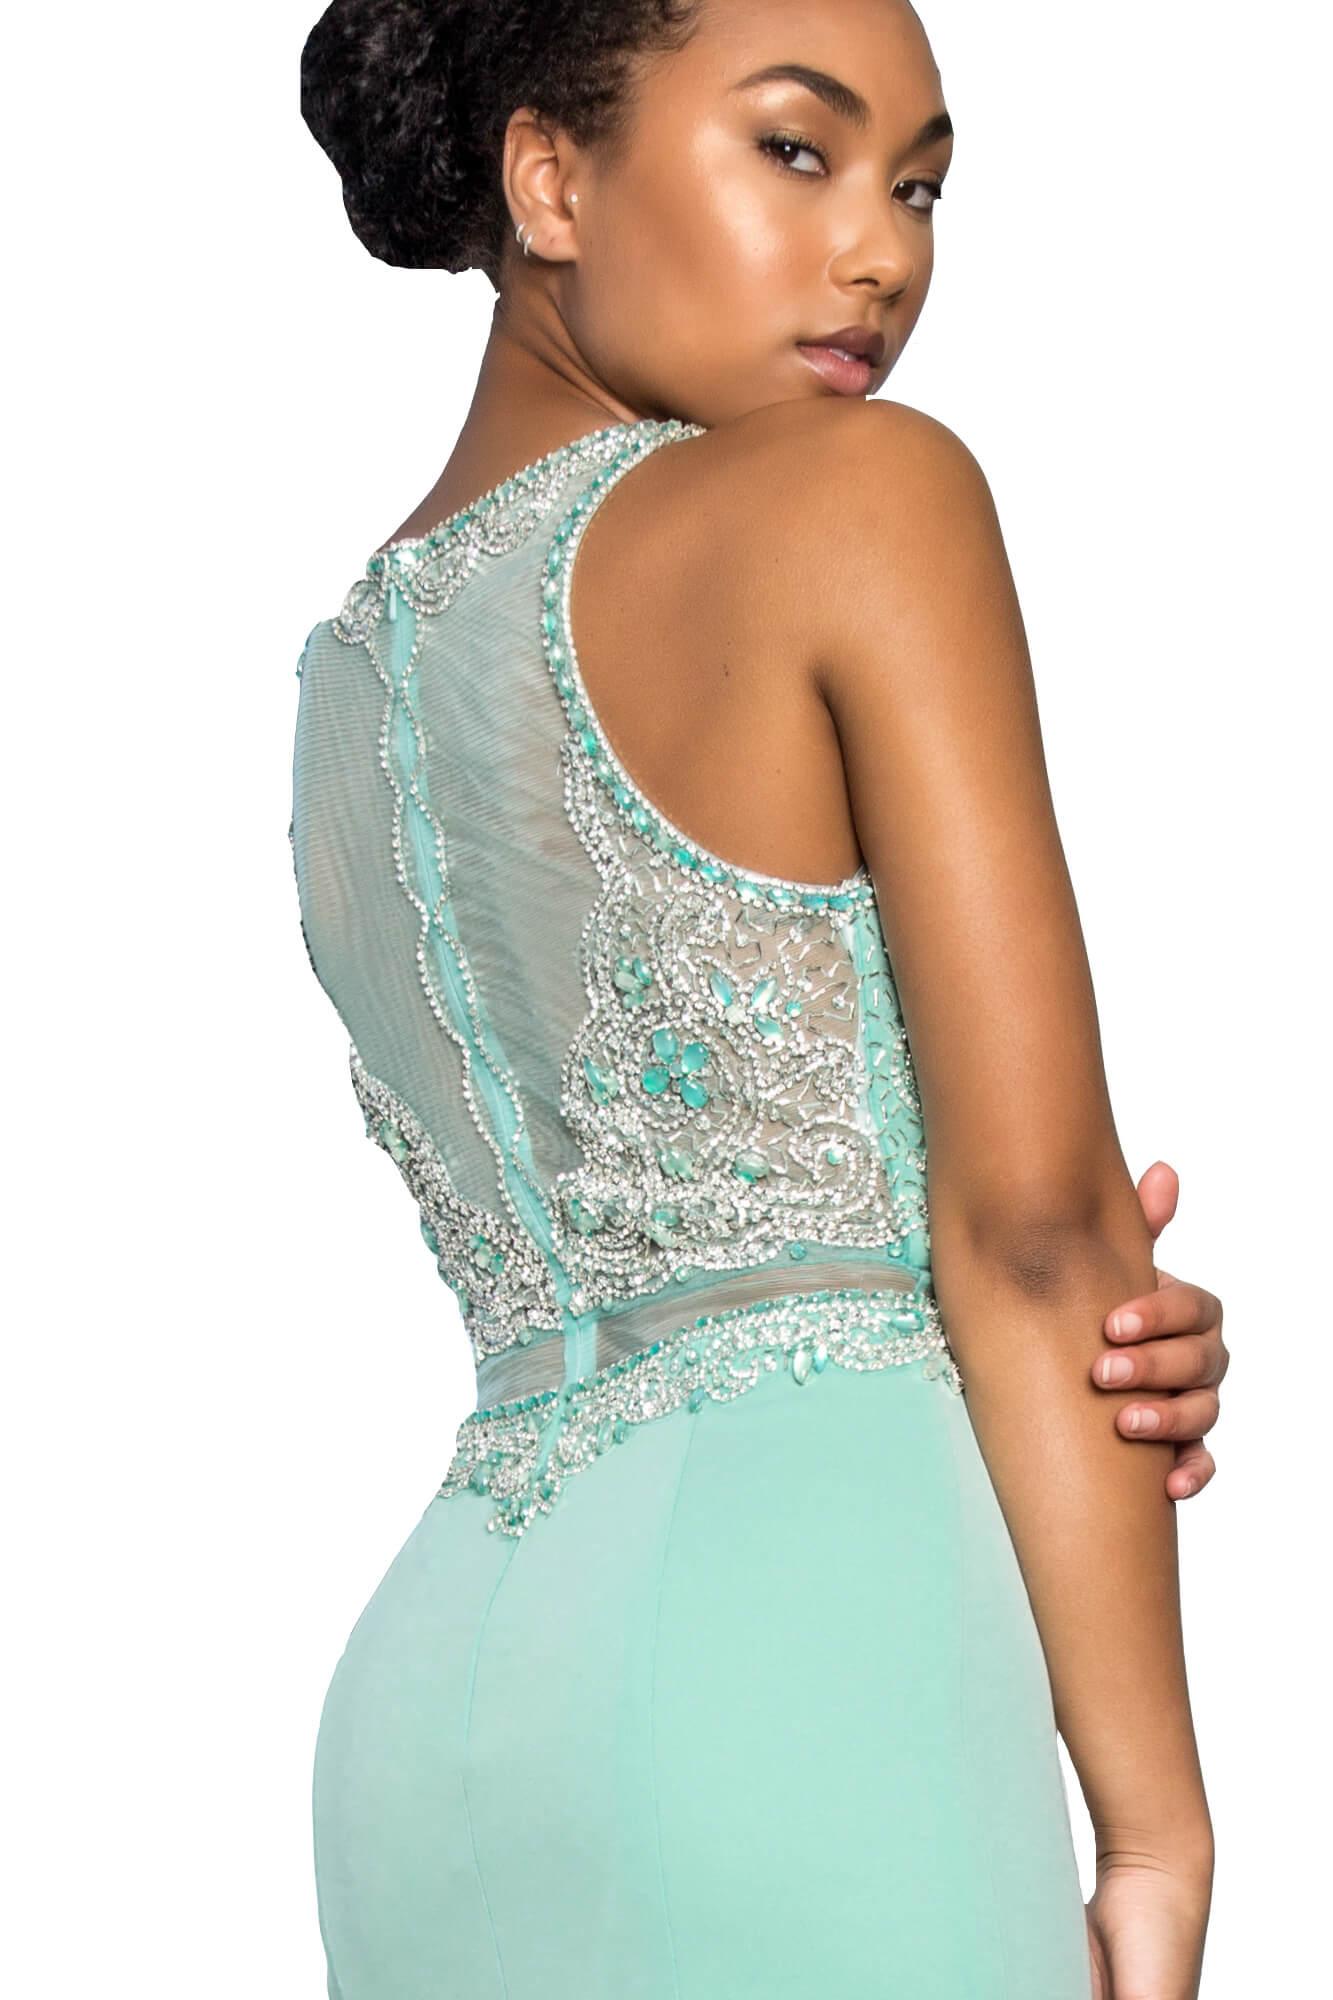 Prom Long Beaded Dress Formal Evening Gown - The Dress Outlet Elizabeth K